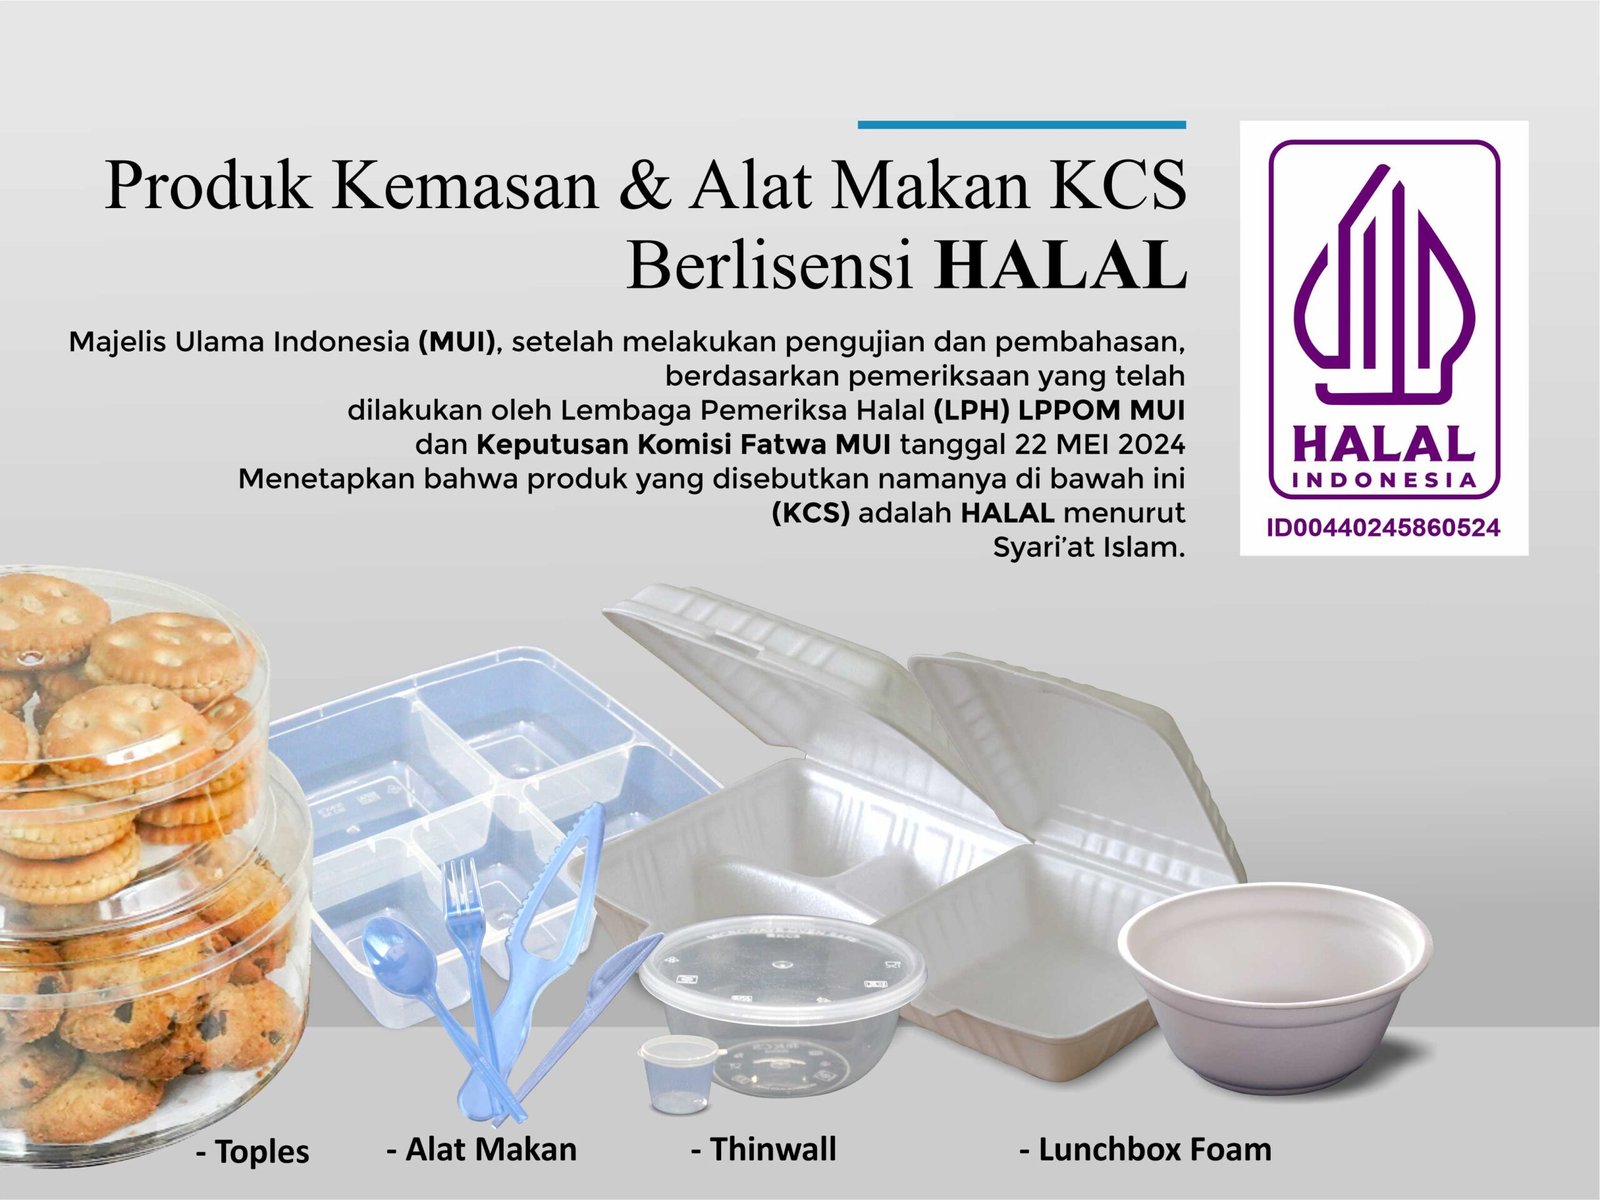 Produk Kemasan & Alat Makan KCS Berlisensi Halal